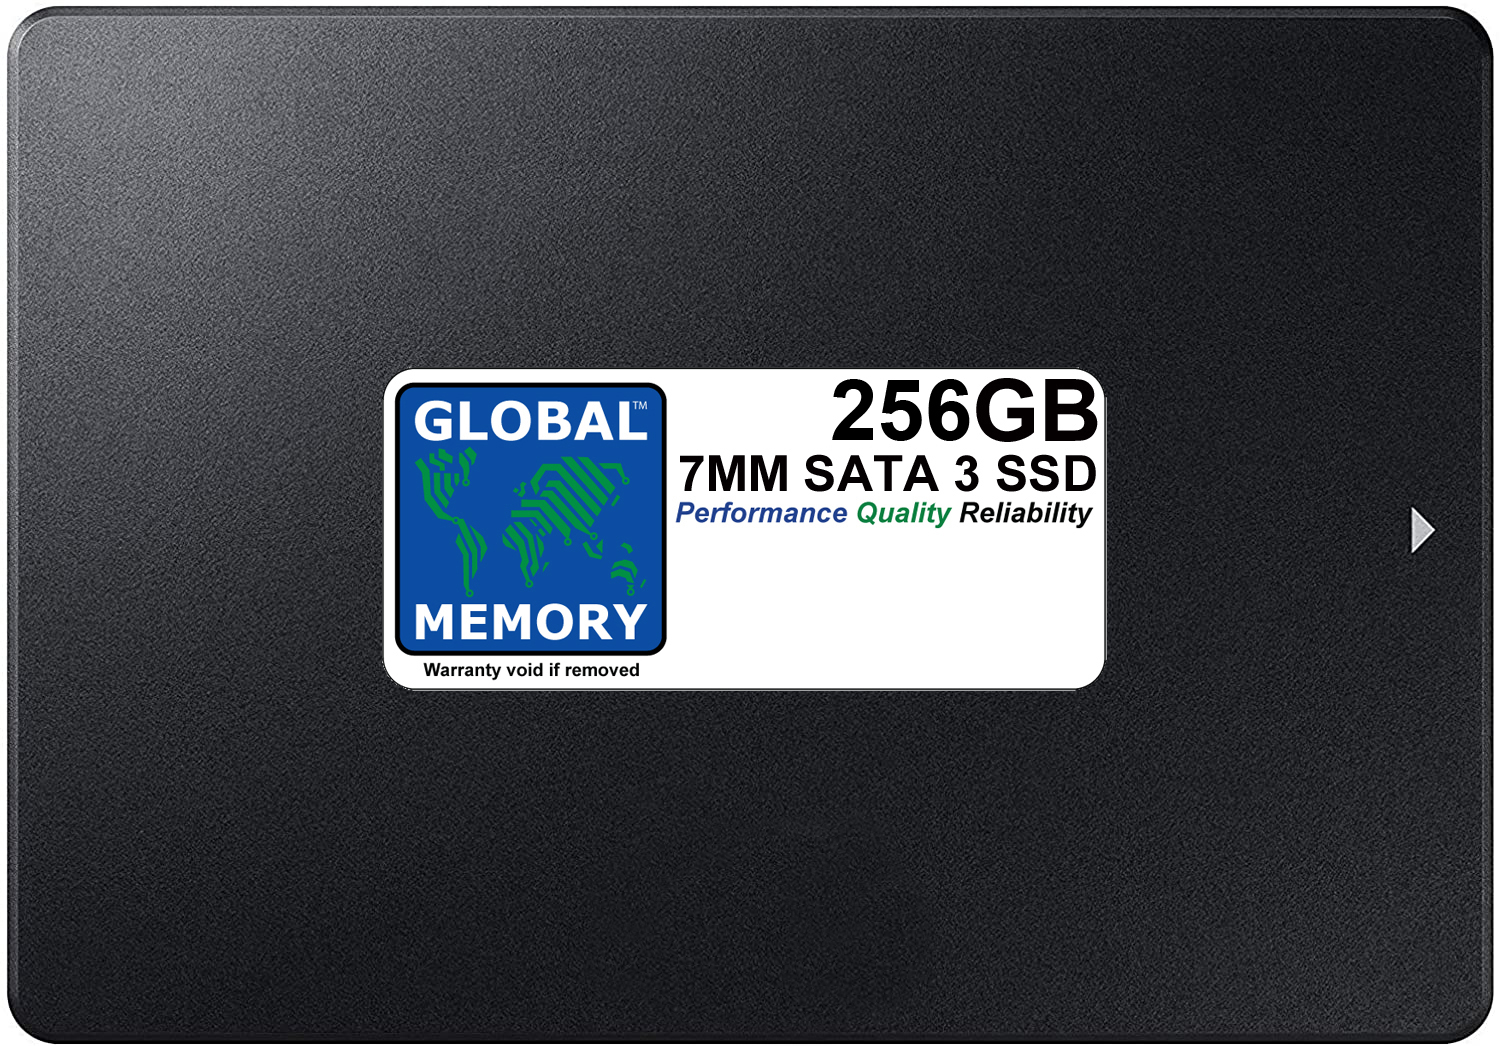 256GB 7mm 2.5" SATA 3 SSD FOR LAPTOPS / DESKTOP PCs / SERVERS / WORKSTATIONS